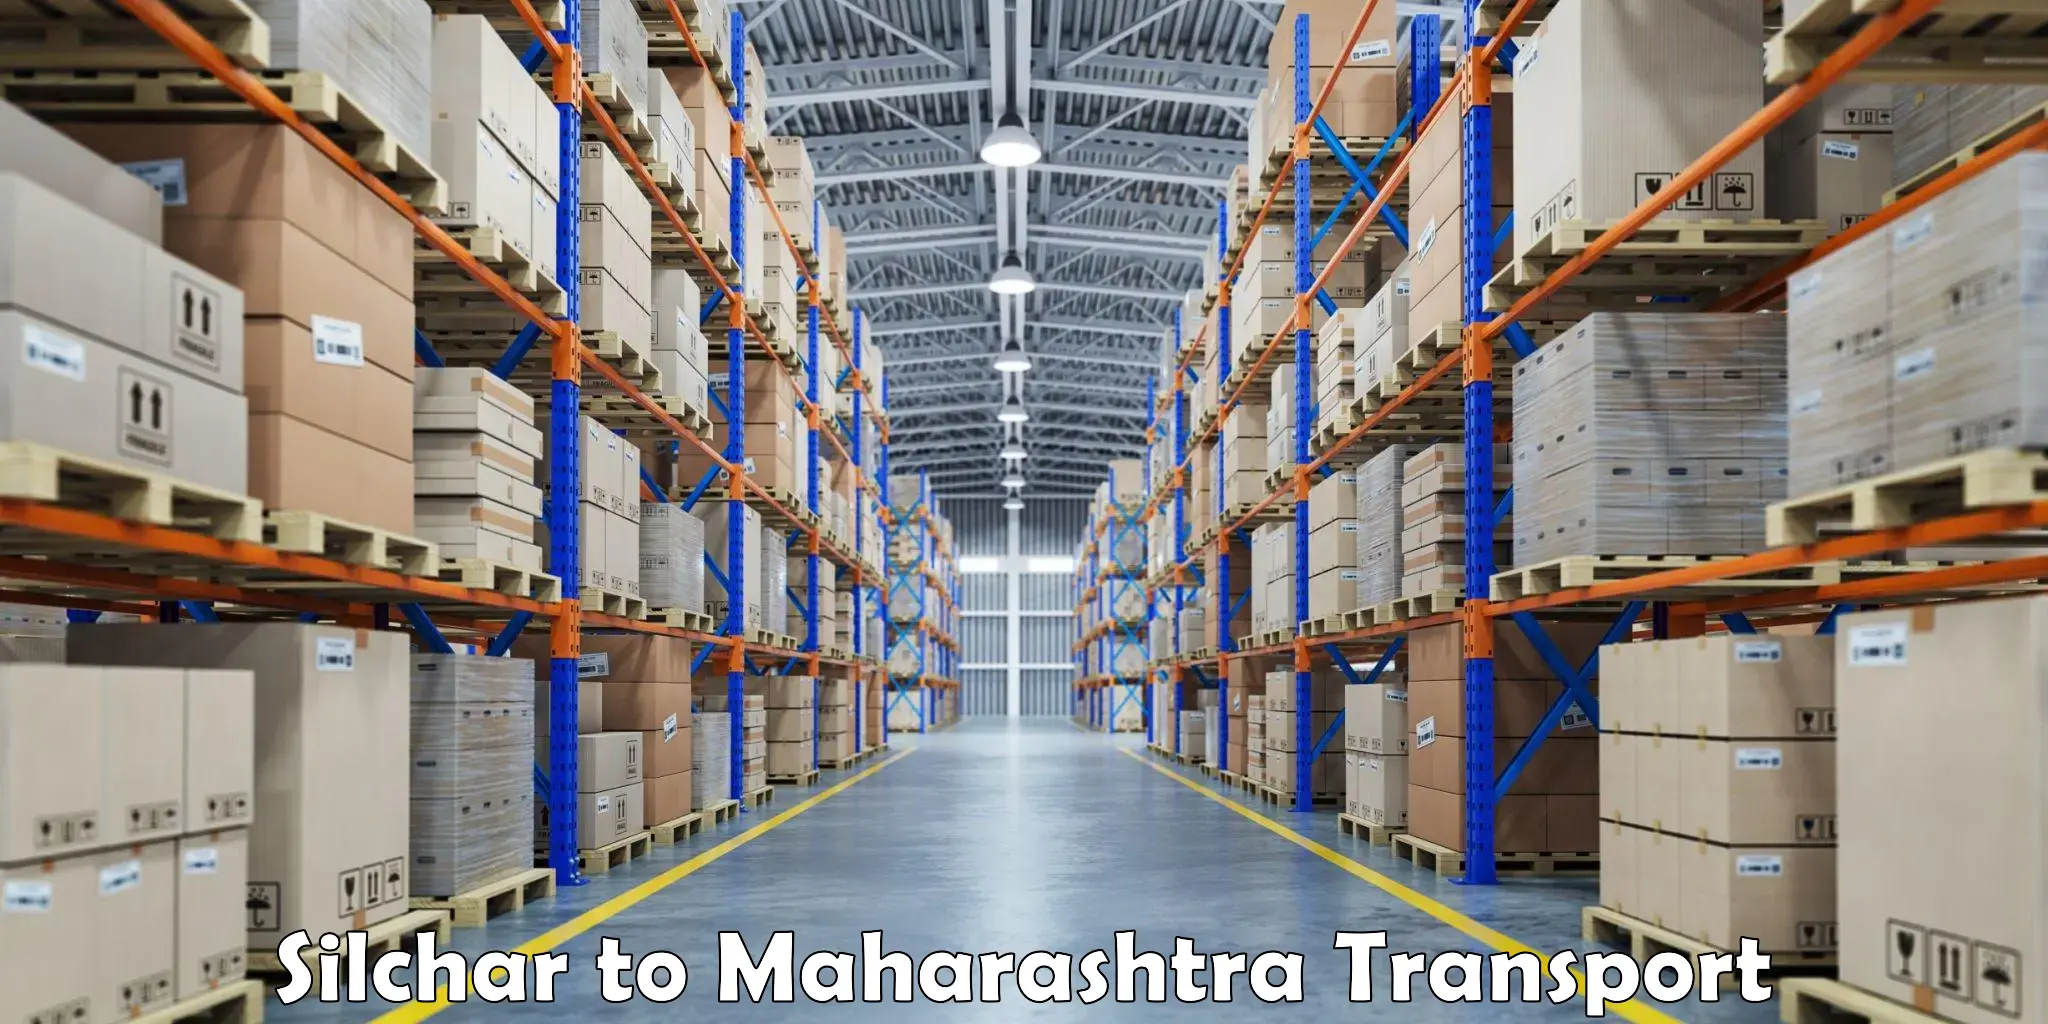 Truck transport companies in India in Silchar to Jawaharlal Nehru Port Nhava Sheva